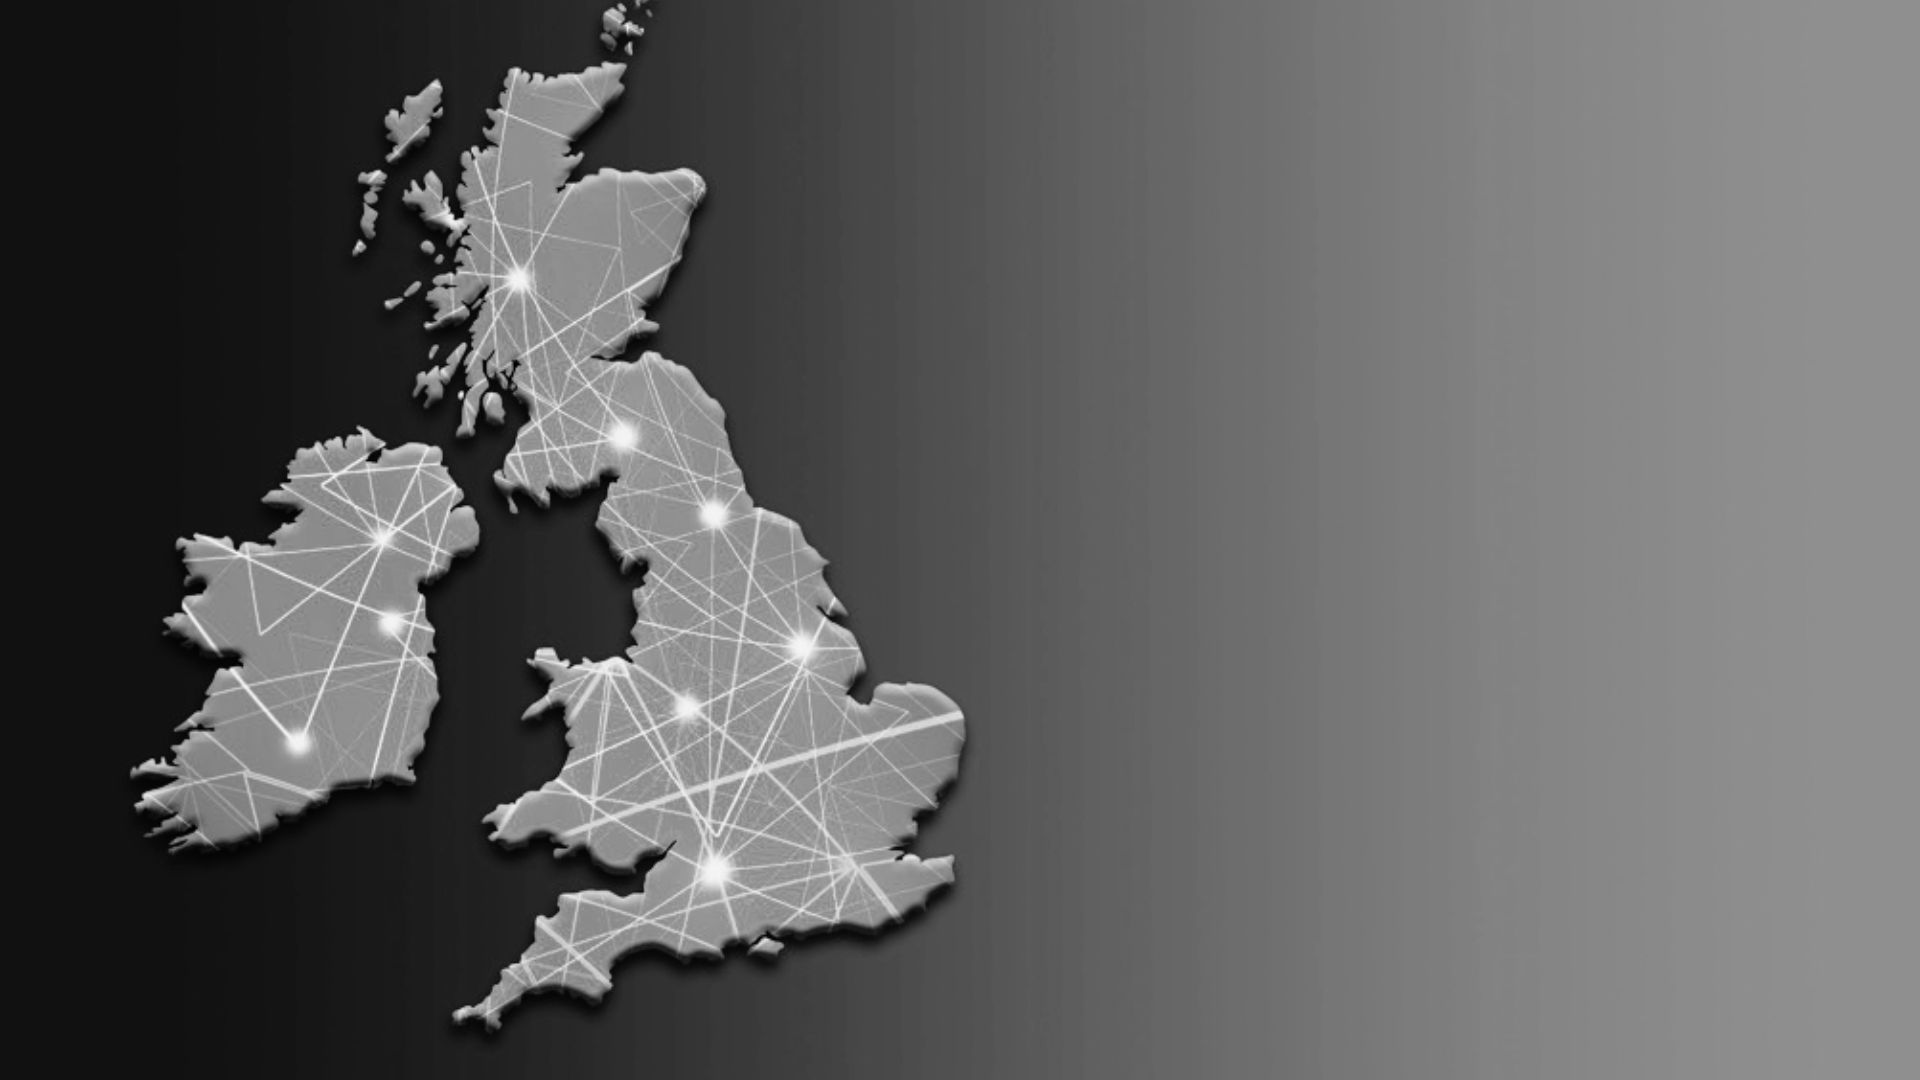 Gigabit Networks Bridging the UK’s Connectivity Gap Through Its Expansion